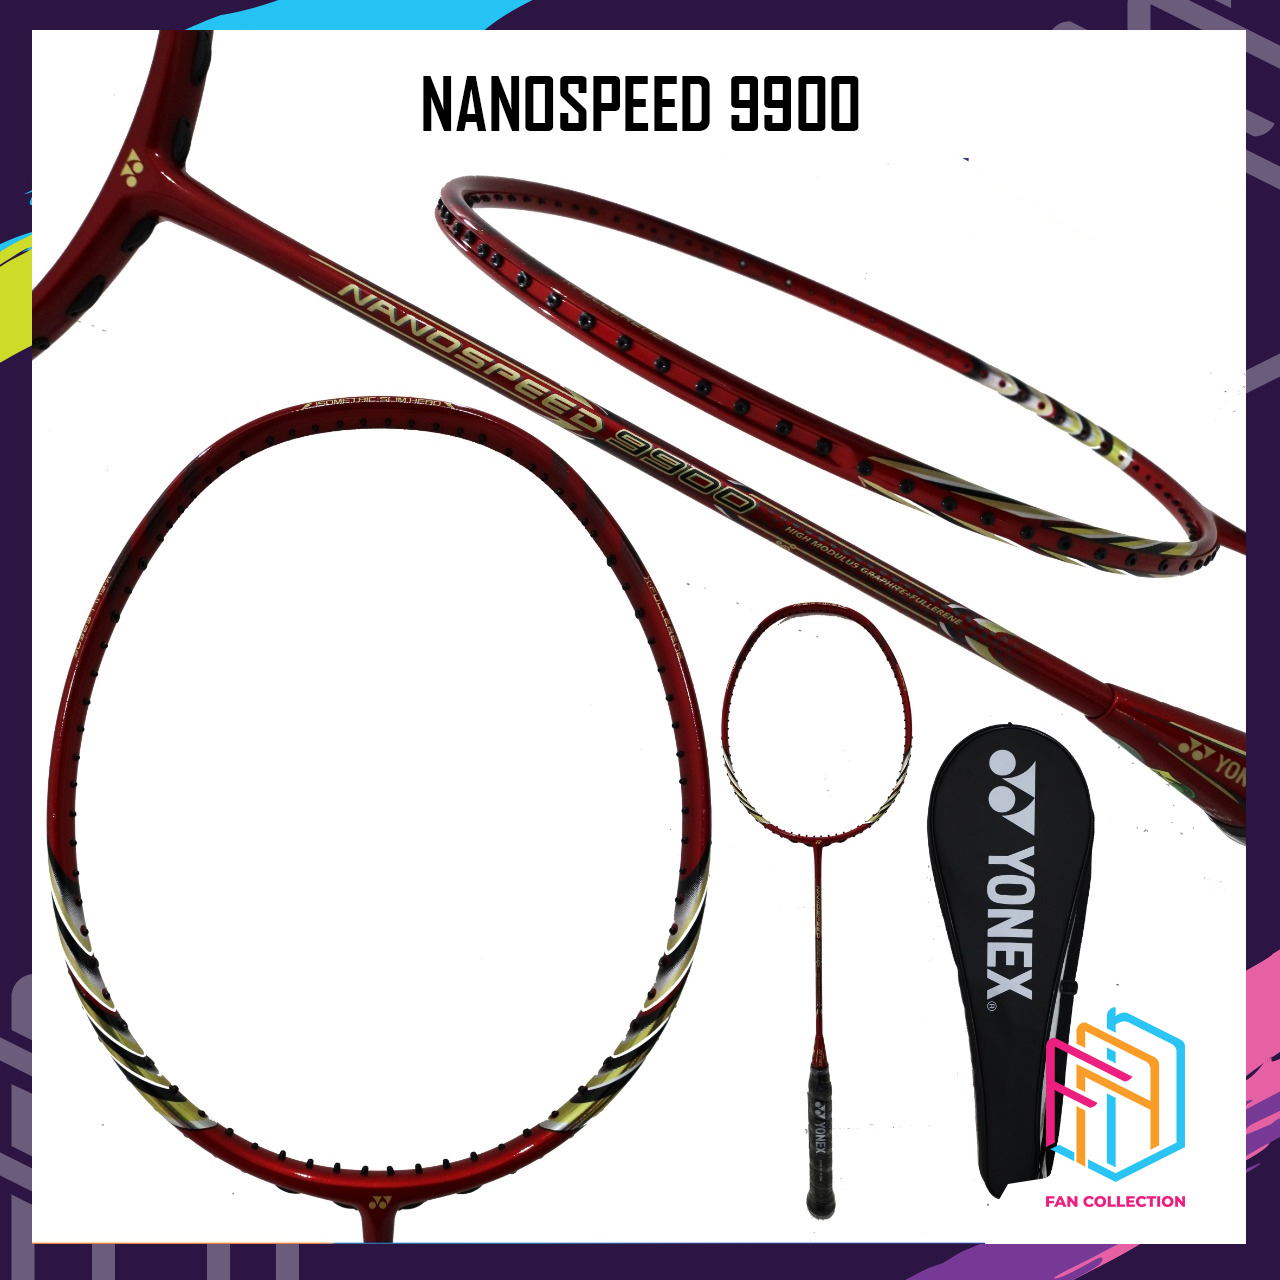 YONEX NANO SPEED 9900 / NANOSPEED 9900 RAKET BADMINTON ORIGINAL